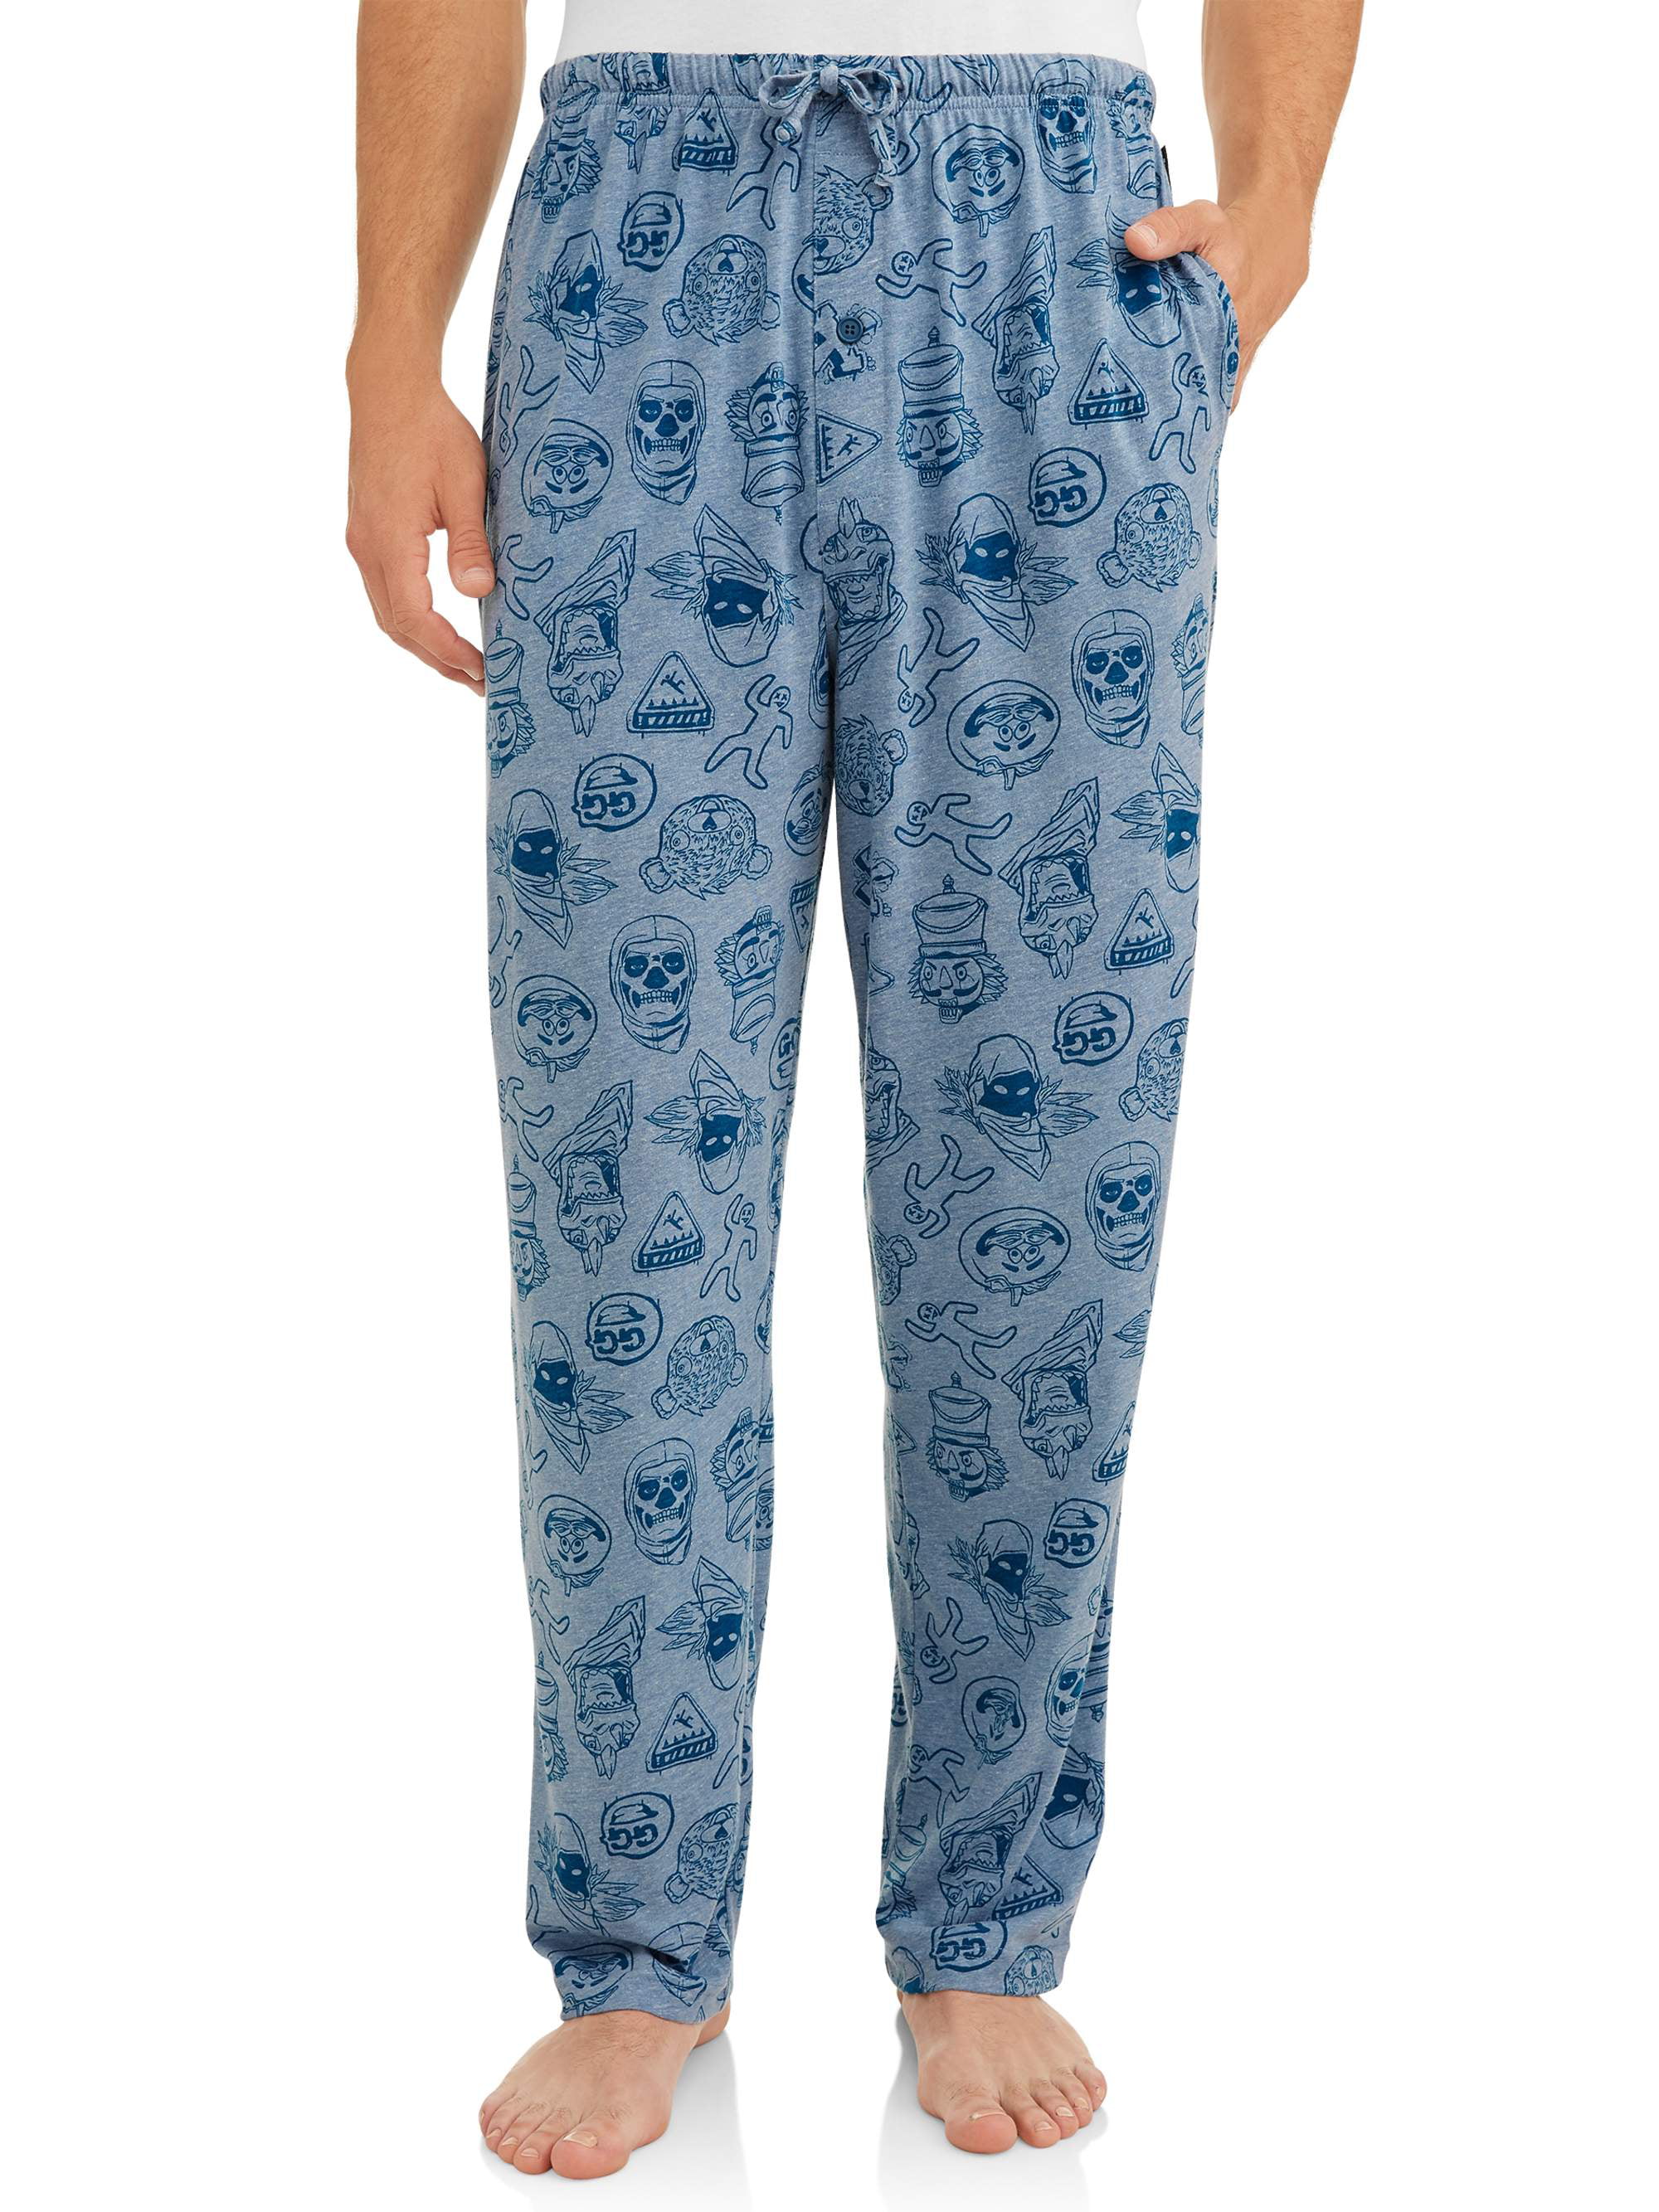 Fortnite - Fortnite Men's Icon Print Pajama Pan - Walmart.com - Walmart.com